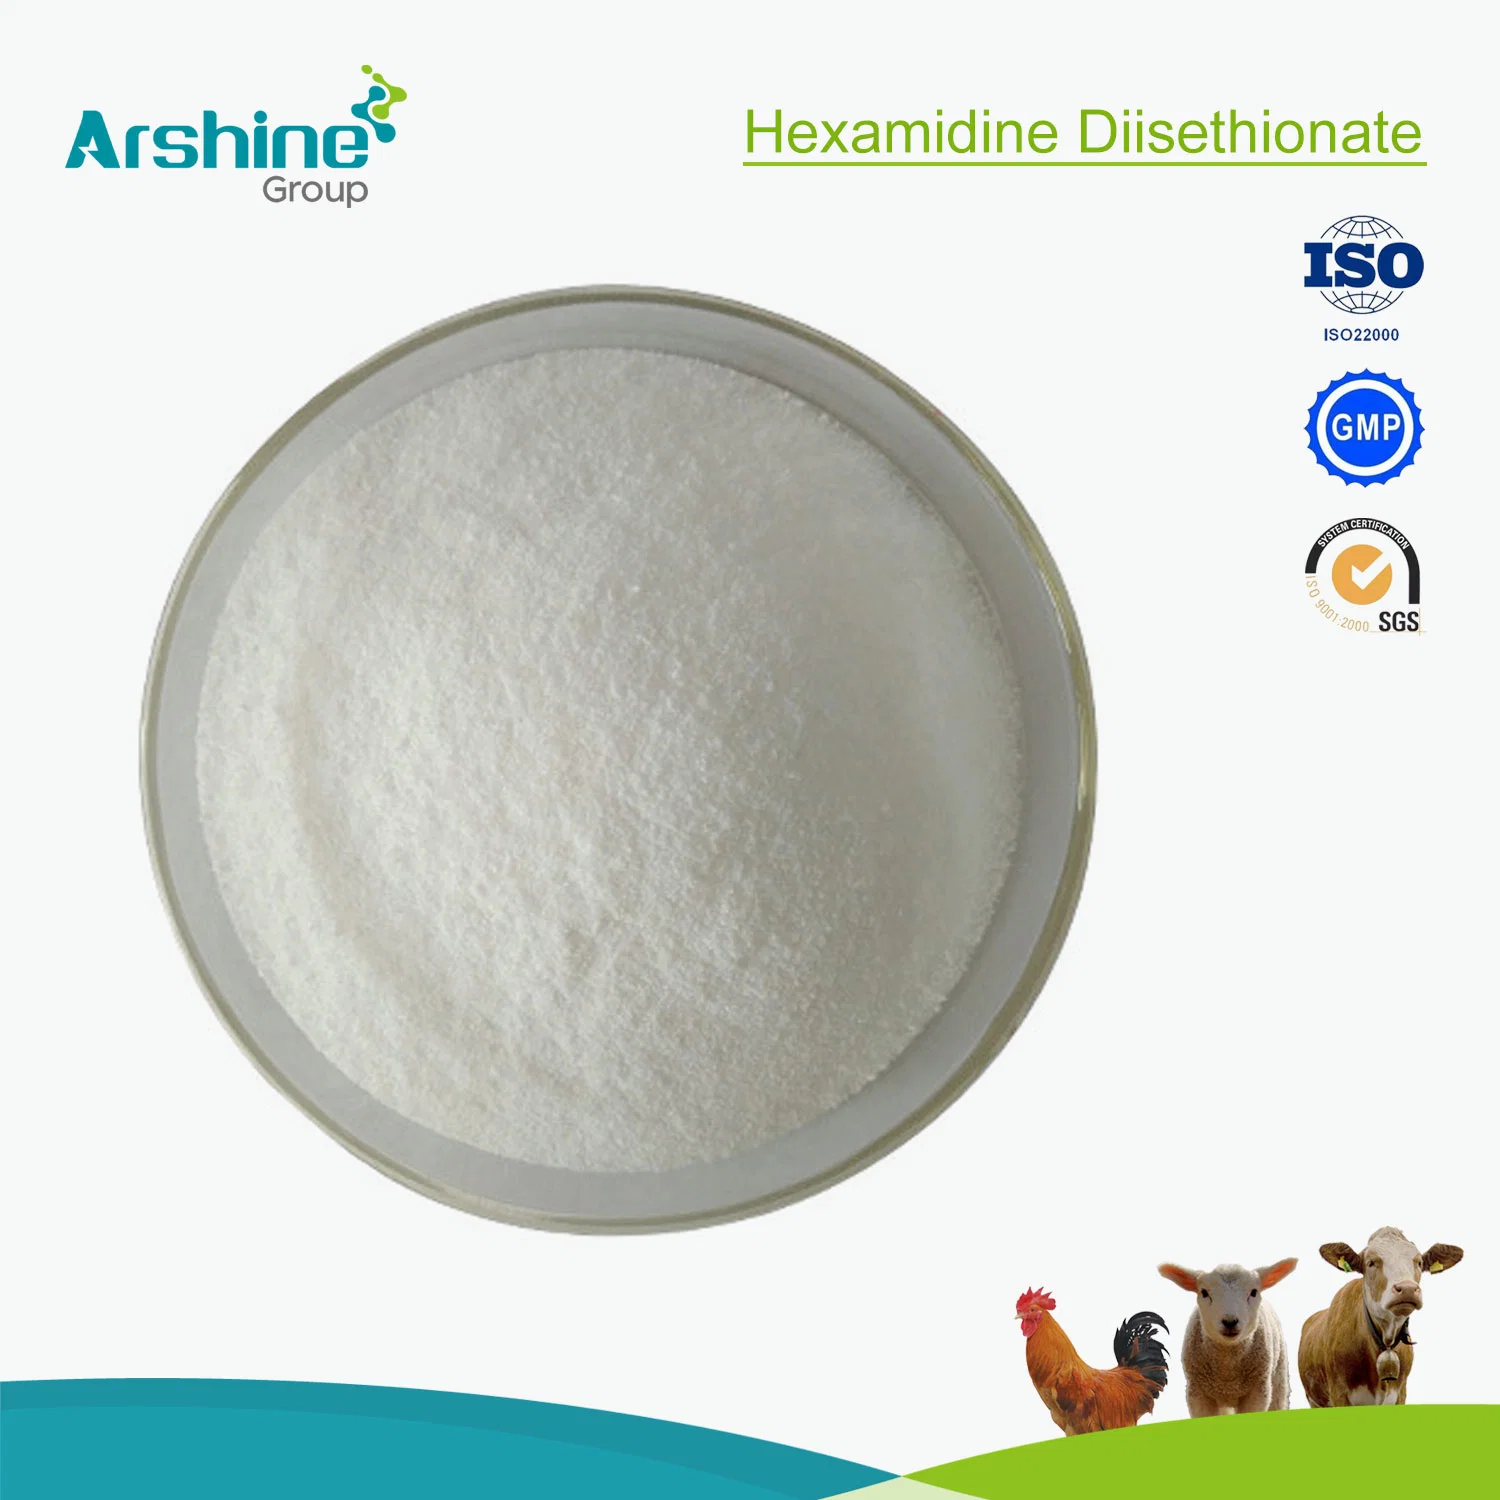 High Purity Pharmaceutical Chemicals CAS659-40-5 Hexamidine Diisethionate